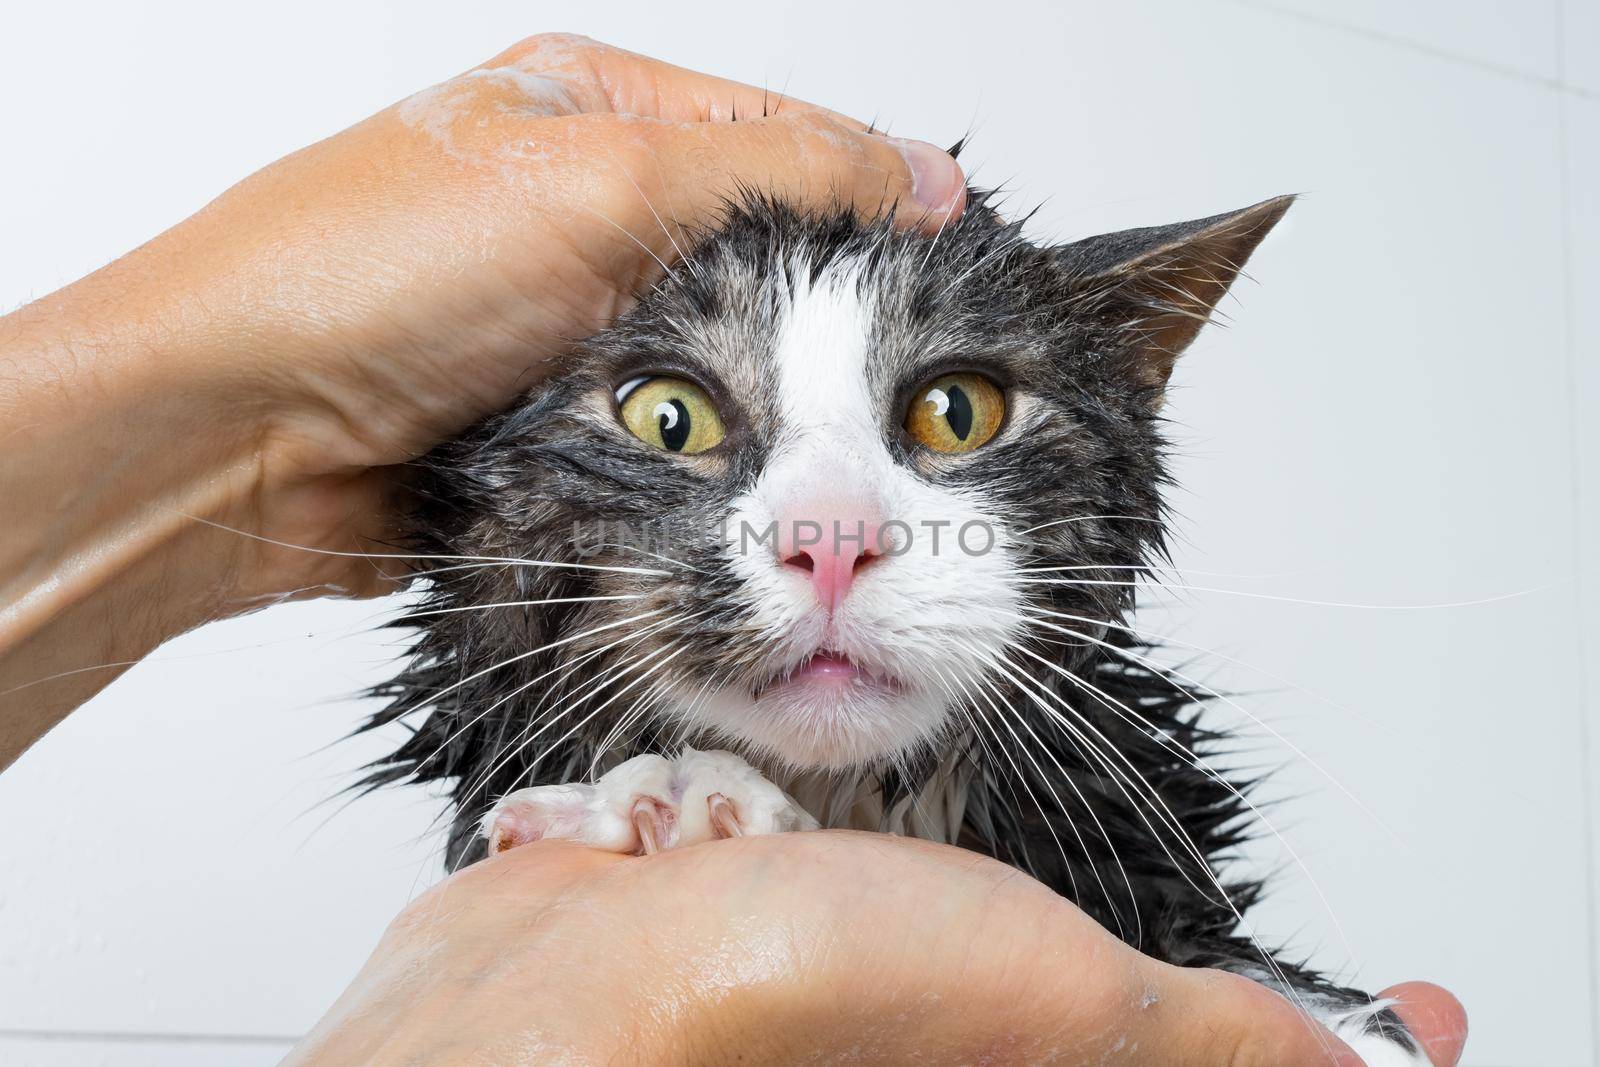 cat grooming. Funny cat taking shower or bath. Man washing cat. Pet hygiene concept. Wet cat. by DariaKulkova